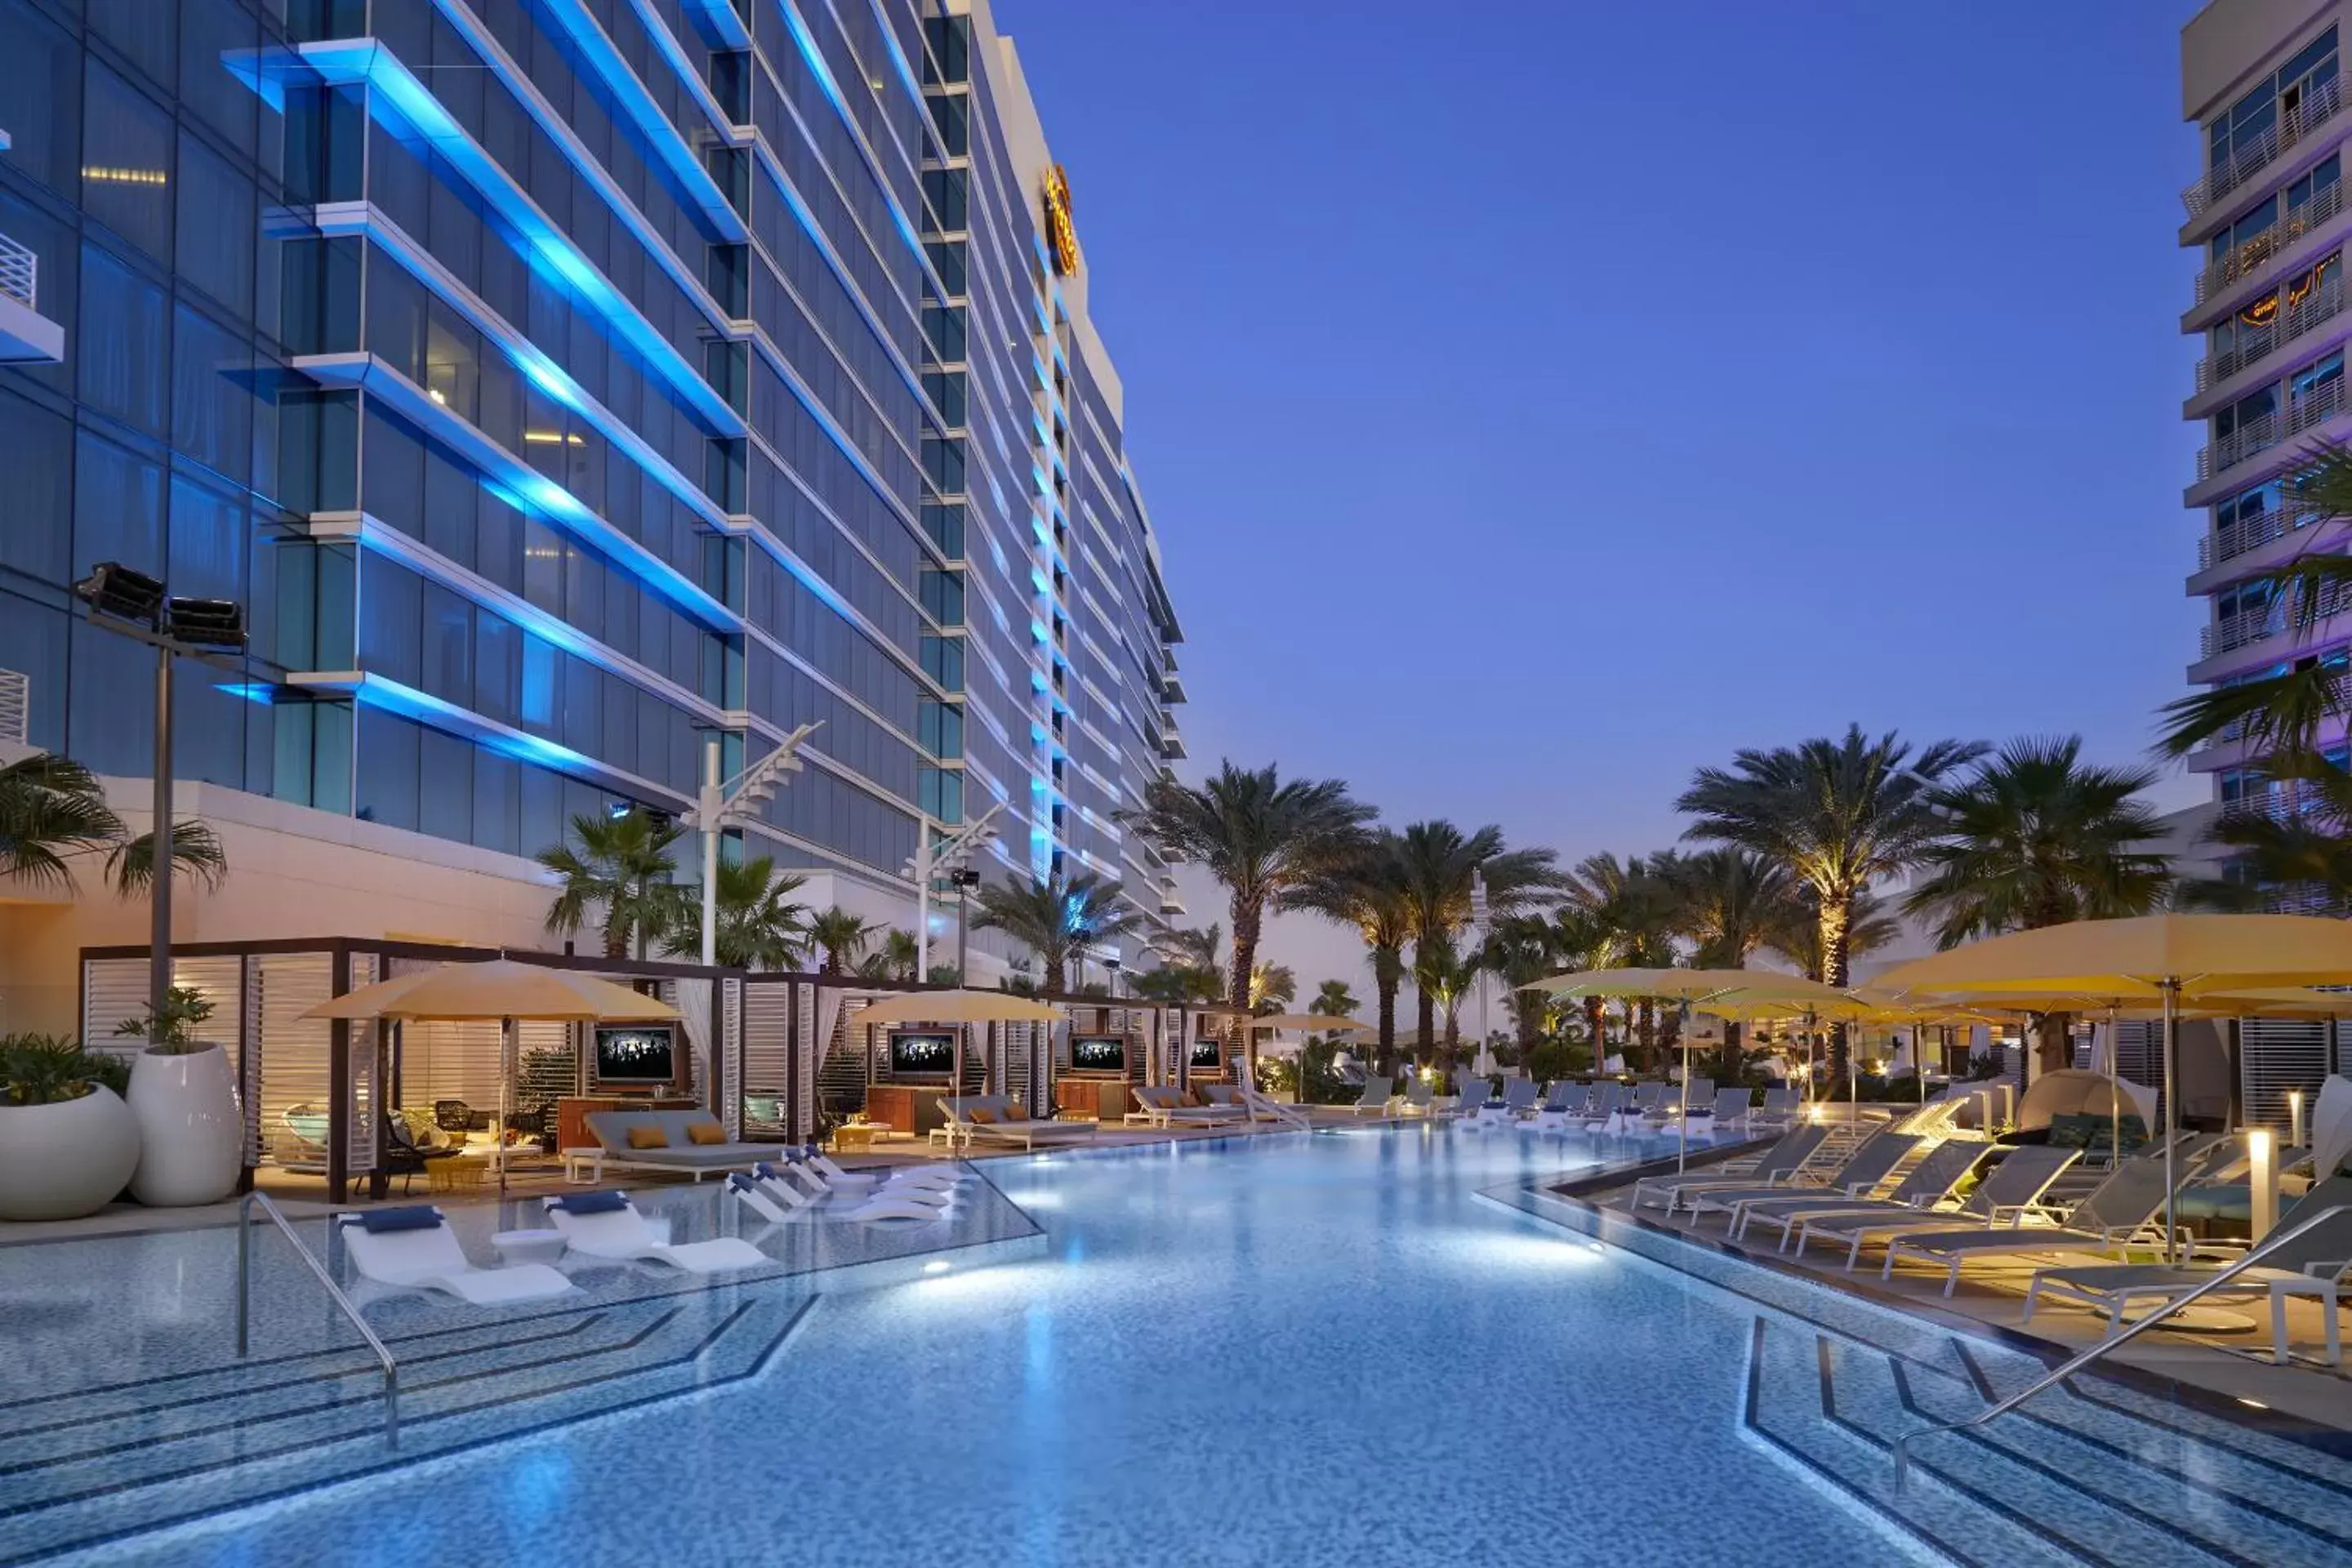 Swimming Pool in Seminole Hard Rock Hotel and Casino Tampa